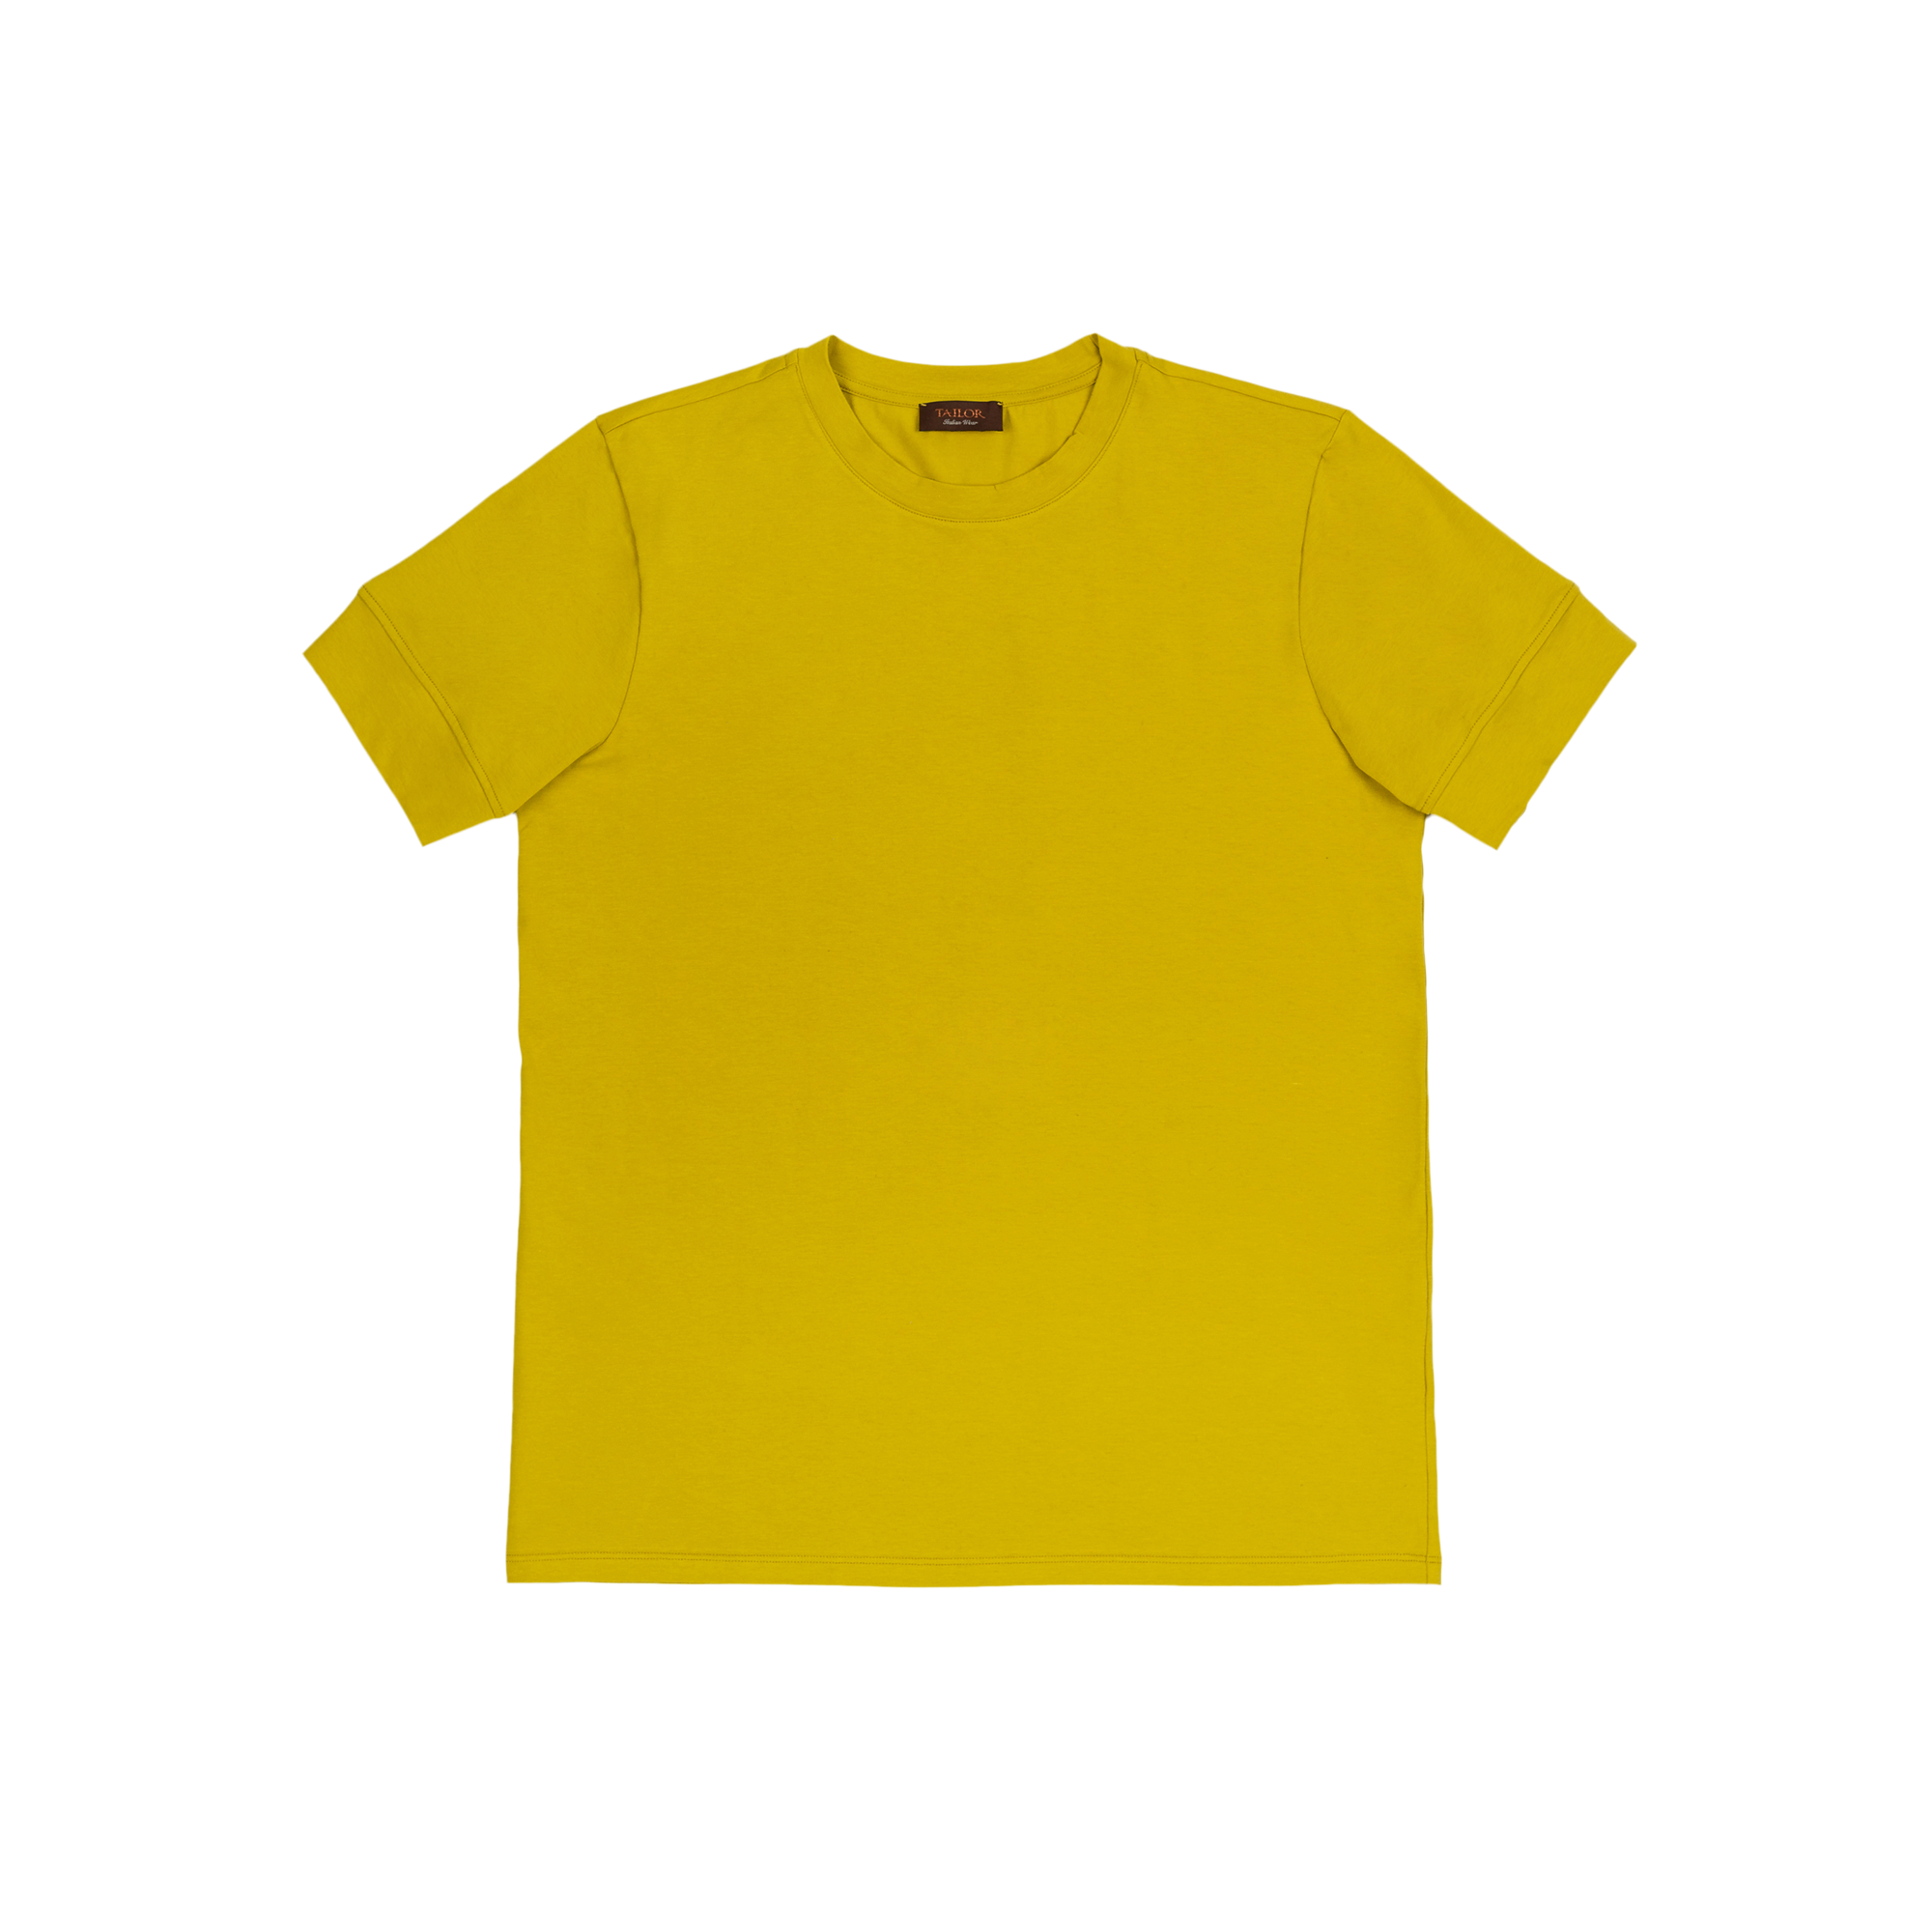 Men's Yellow T-shirt